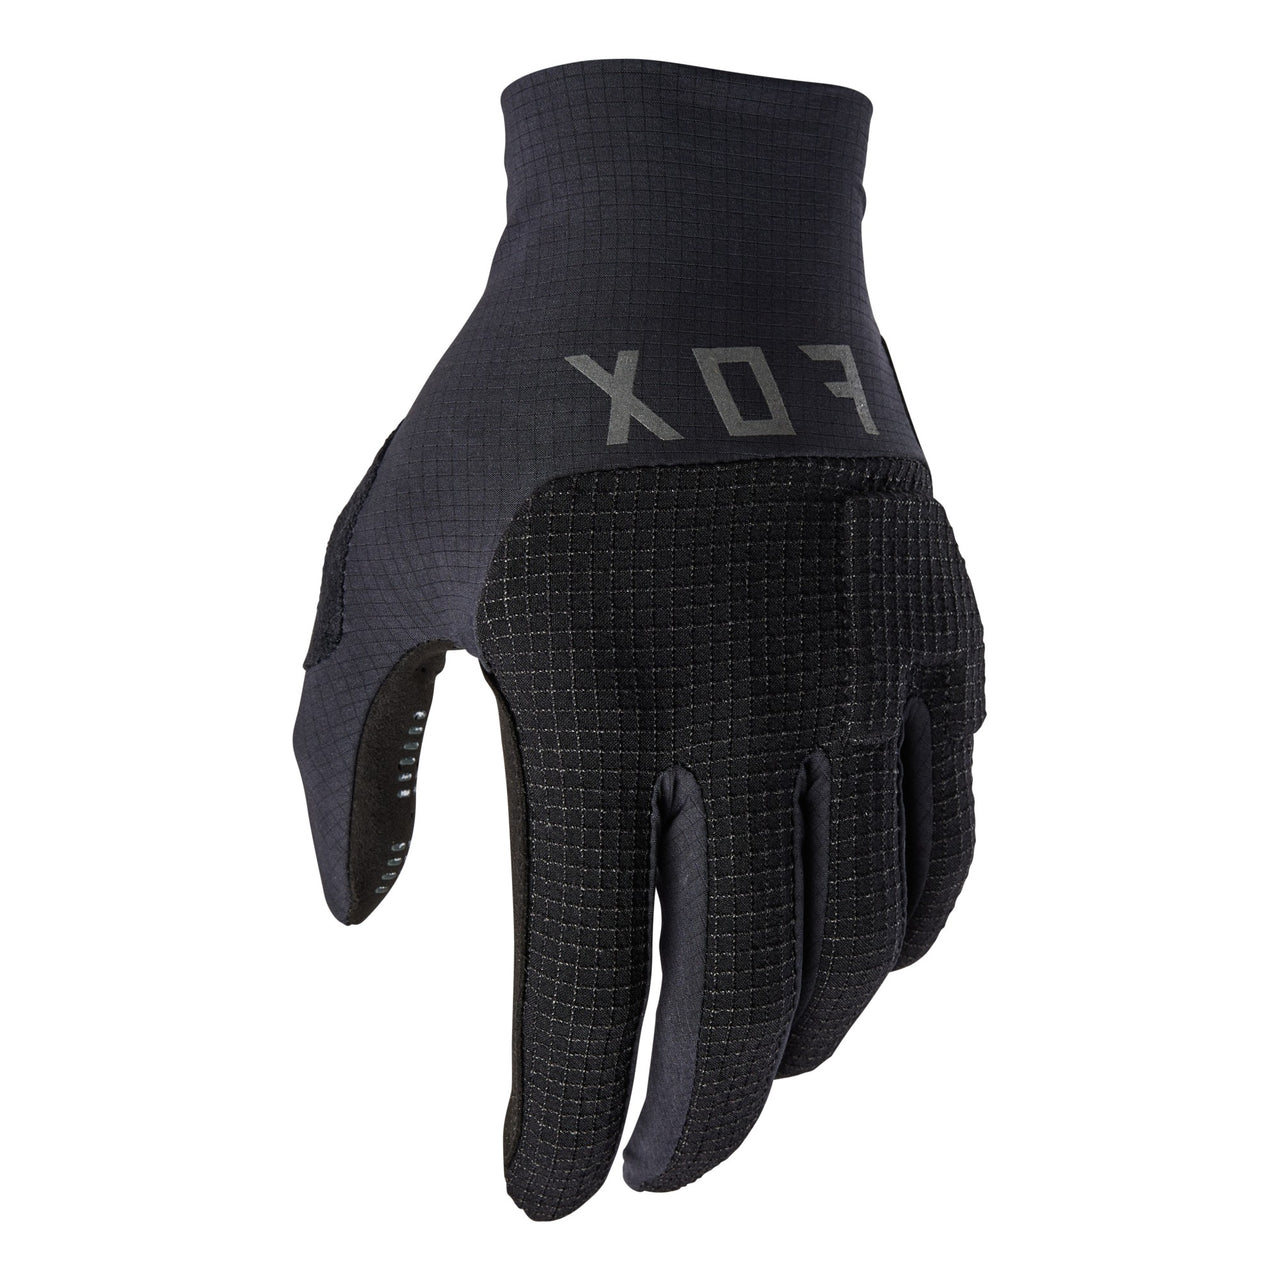 Fox Flexair Pro Gloves Black